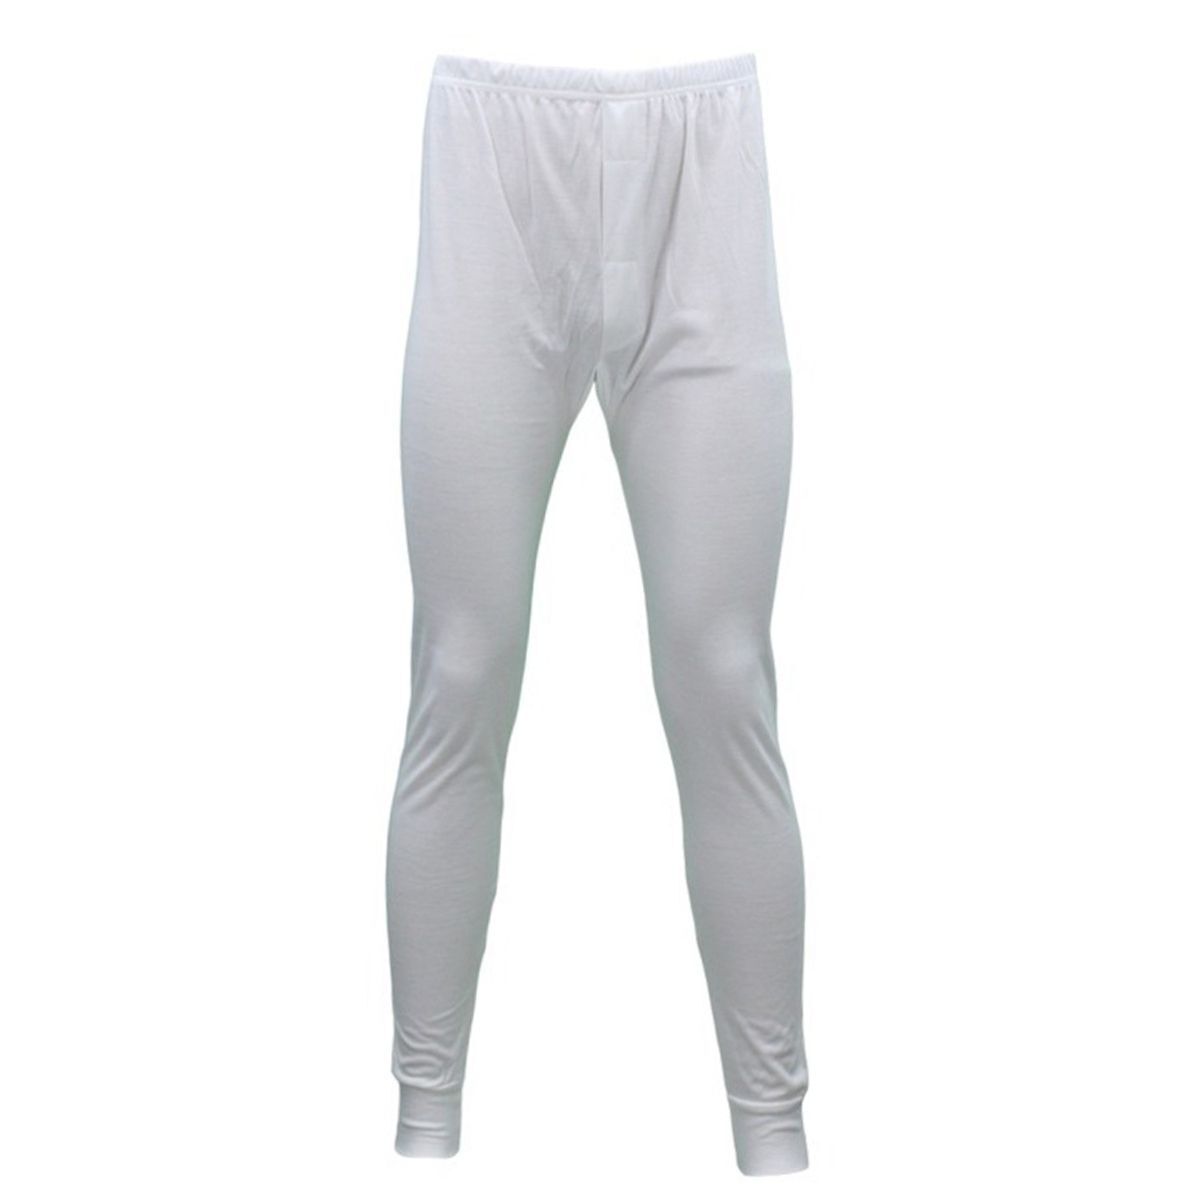 Men's Merino Wool Blend Long Sleeve Thermal Top Pants Long Johns ...